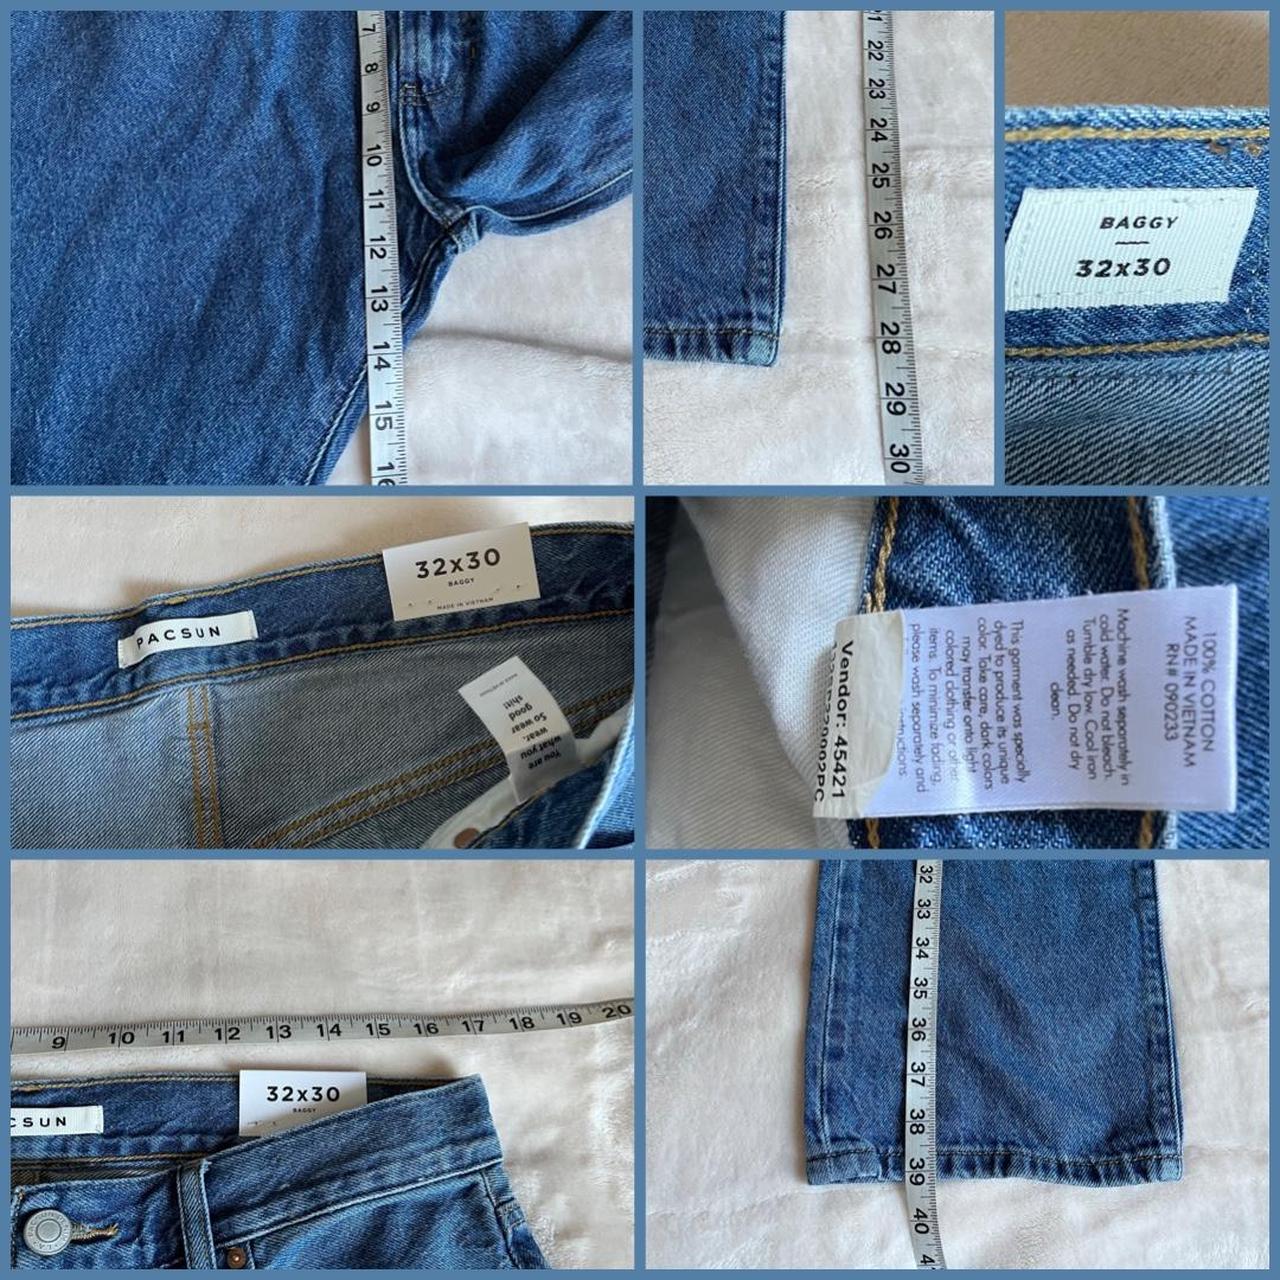 Product Image 3 - PacSun Medium Indigo Baggy Jeans

Nwt